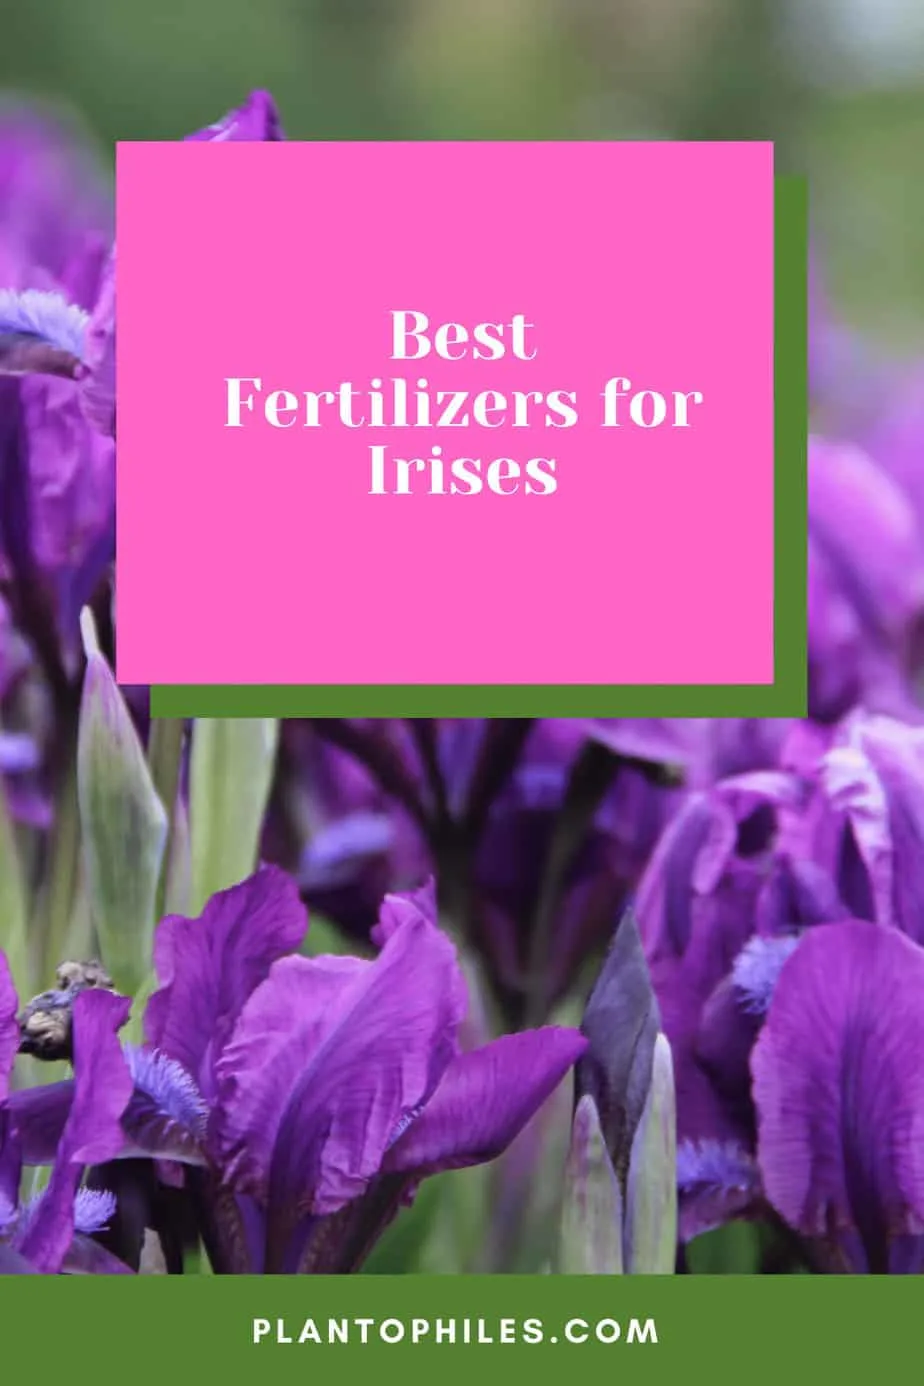 Best Fertilizers for Irises